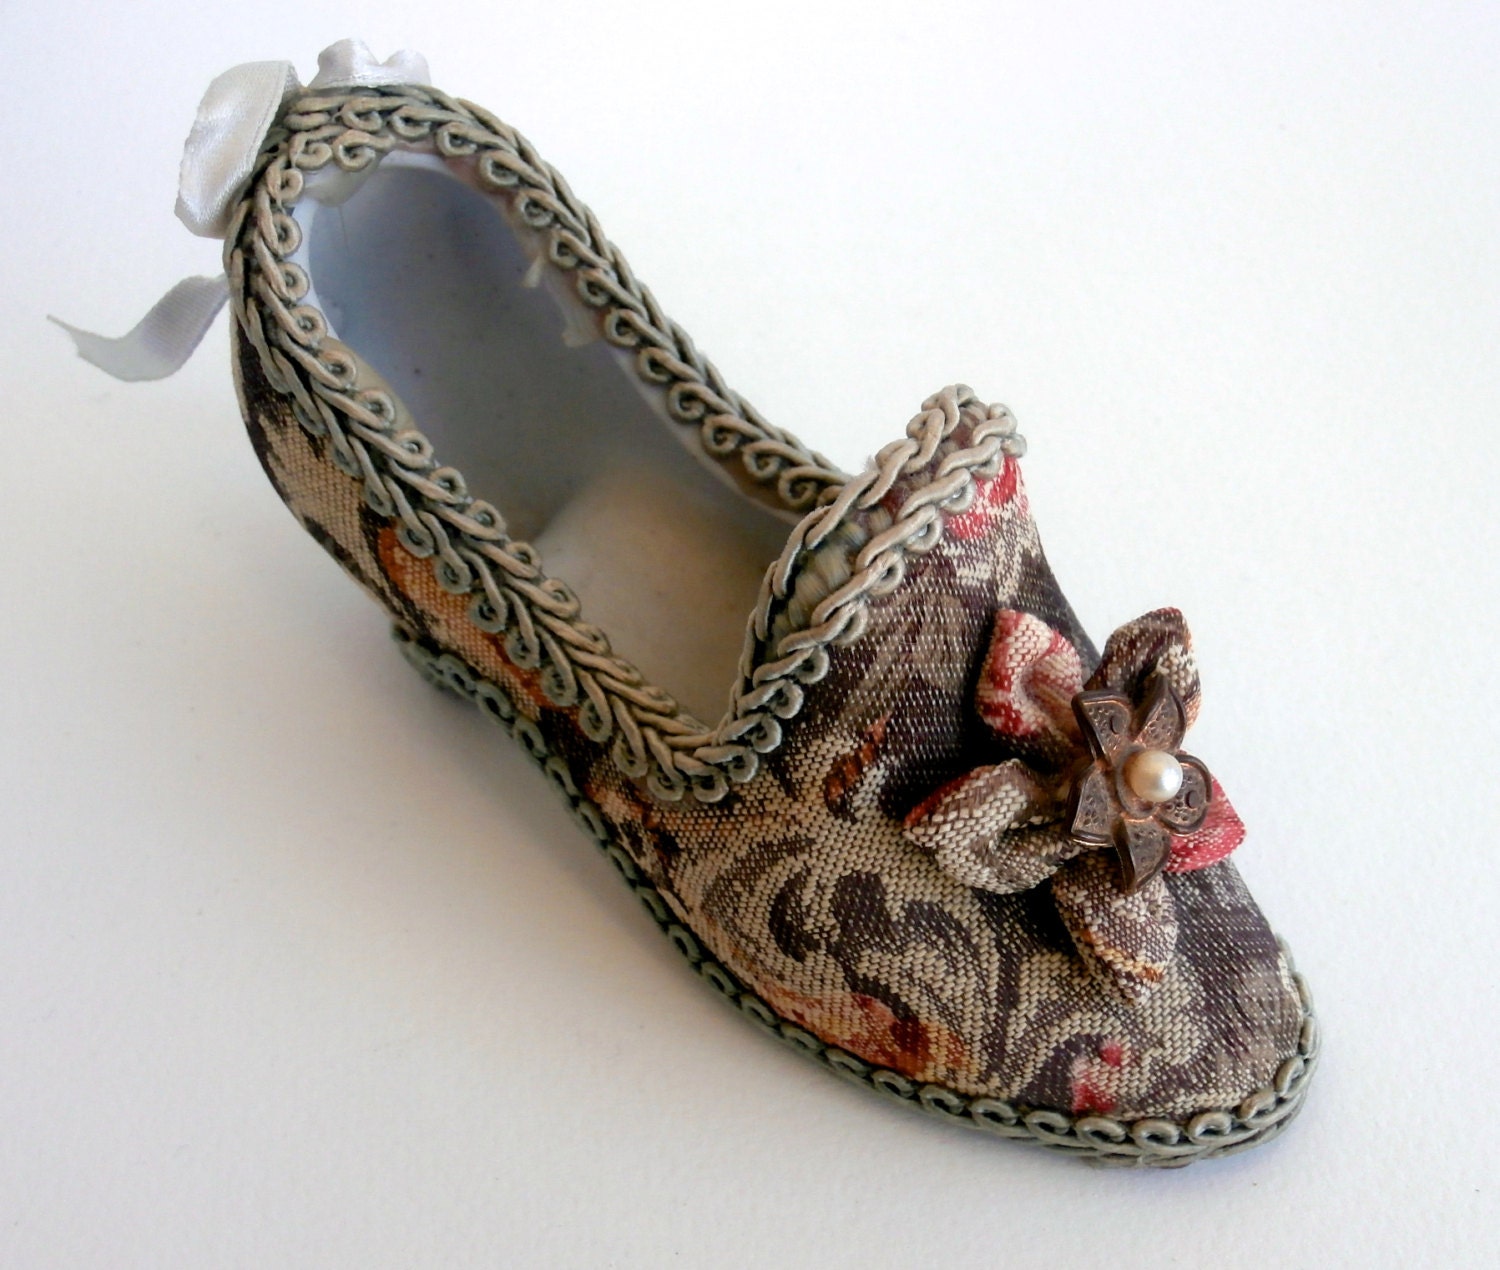 Decorative Miniature Shoe Ornamental by ReTainReMakeReNew on Etsy